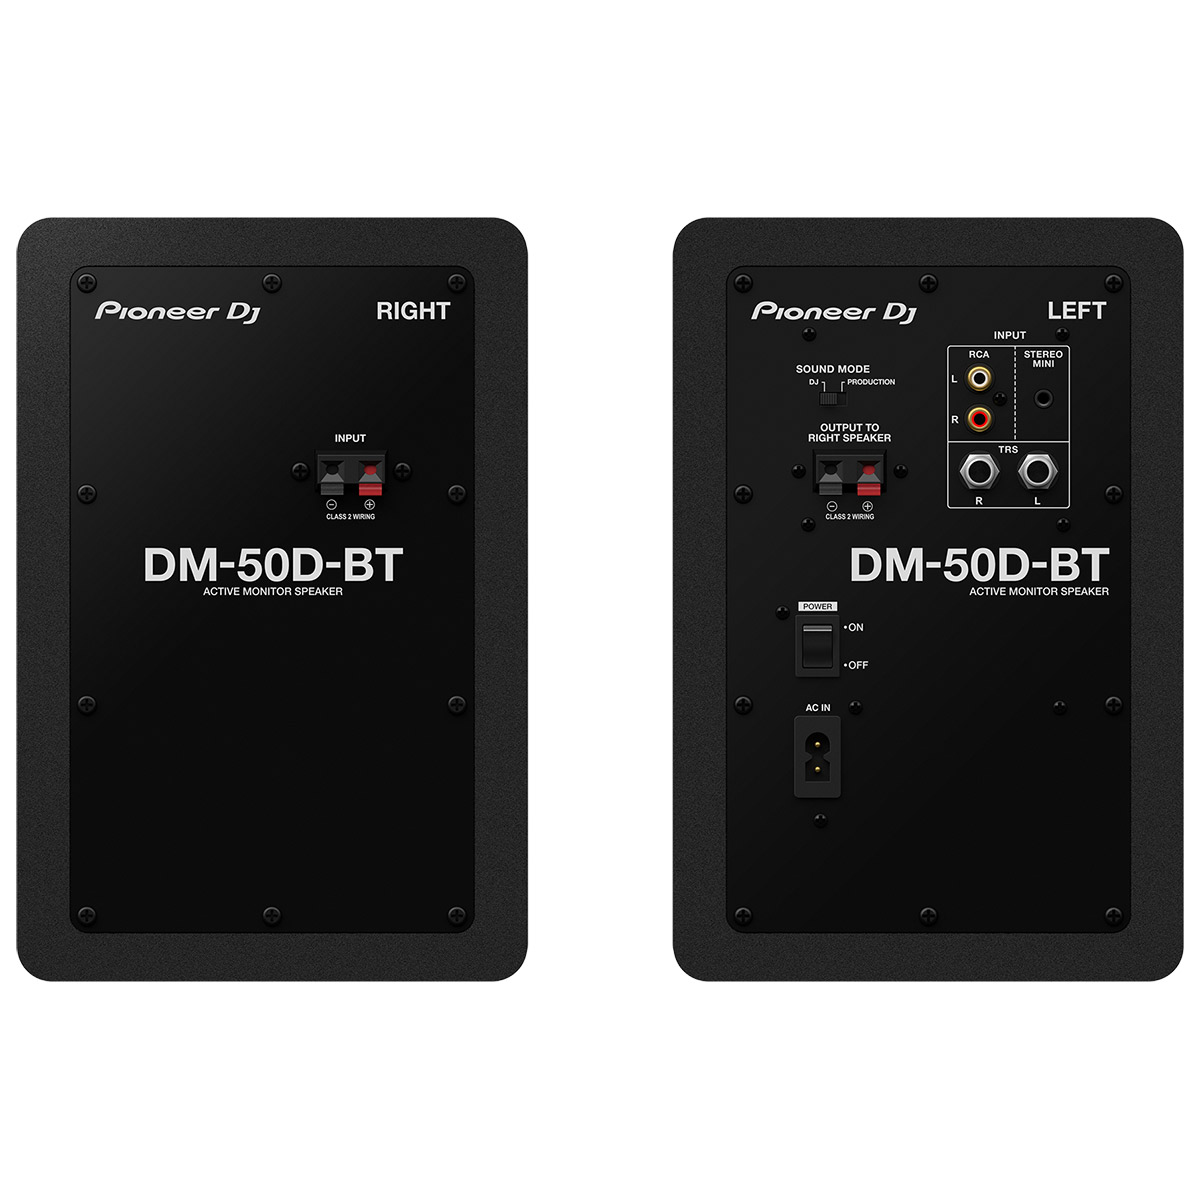 Pioneer DJ DM-50D-BT (Black) モニタースピーカー Bluetoothスピーカー ワイヤレススピーカー [ペア] 2台  パイオニア DM50DBT